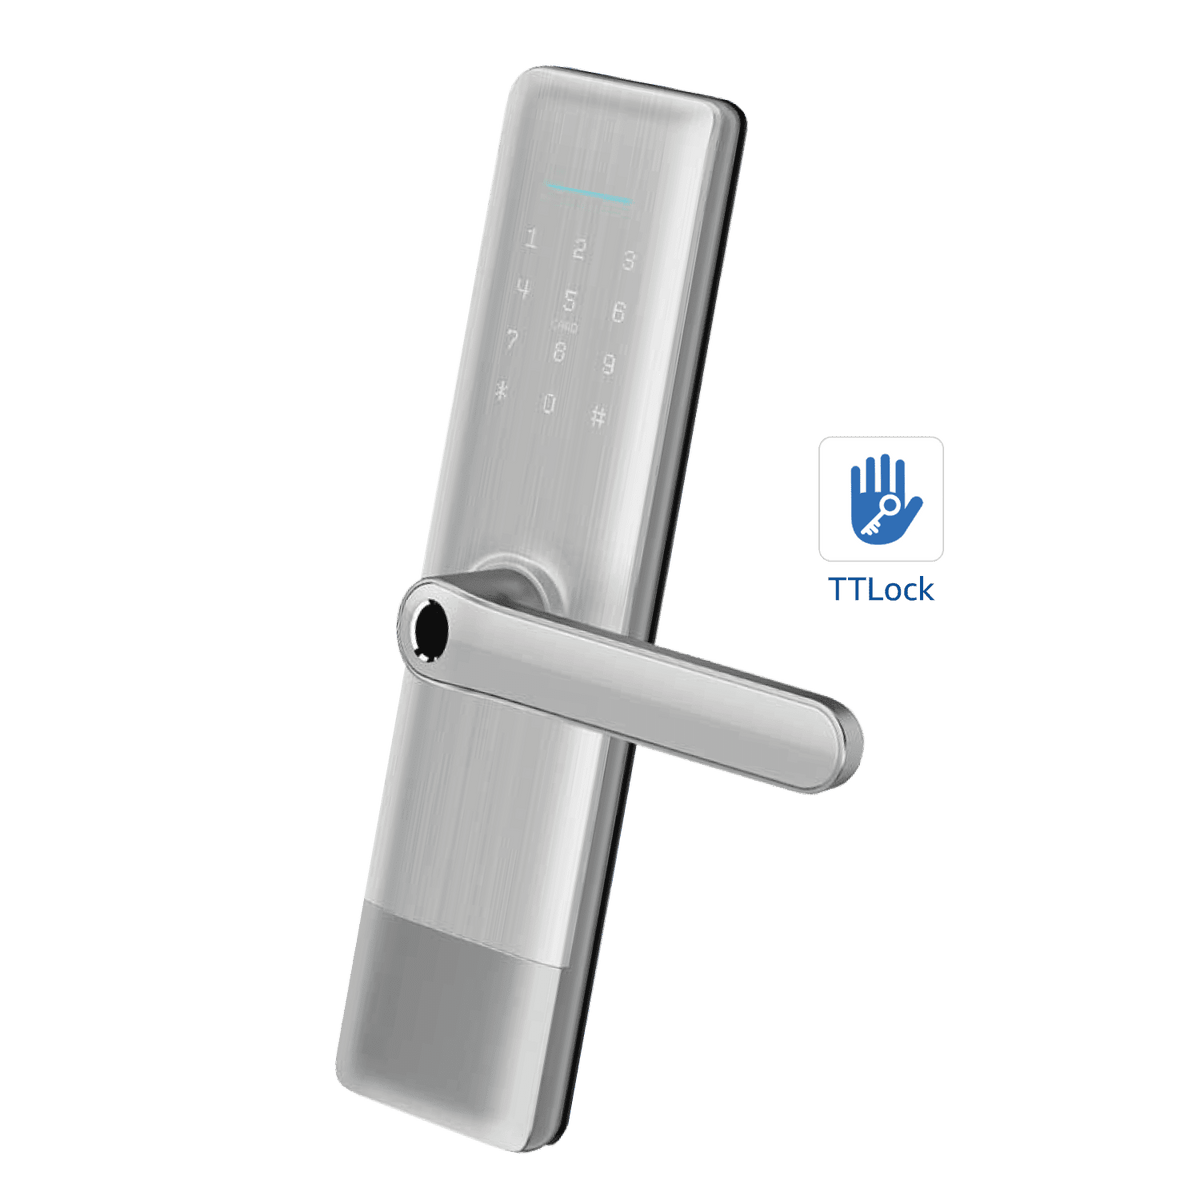 Cerradura Inteligente SM008 Metalizada WIFI Bluetooth TTLOCK